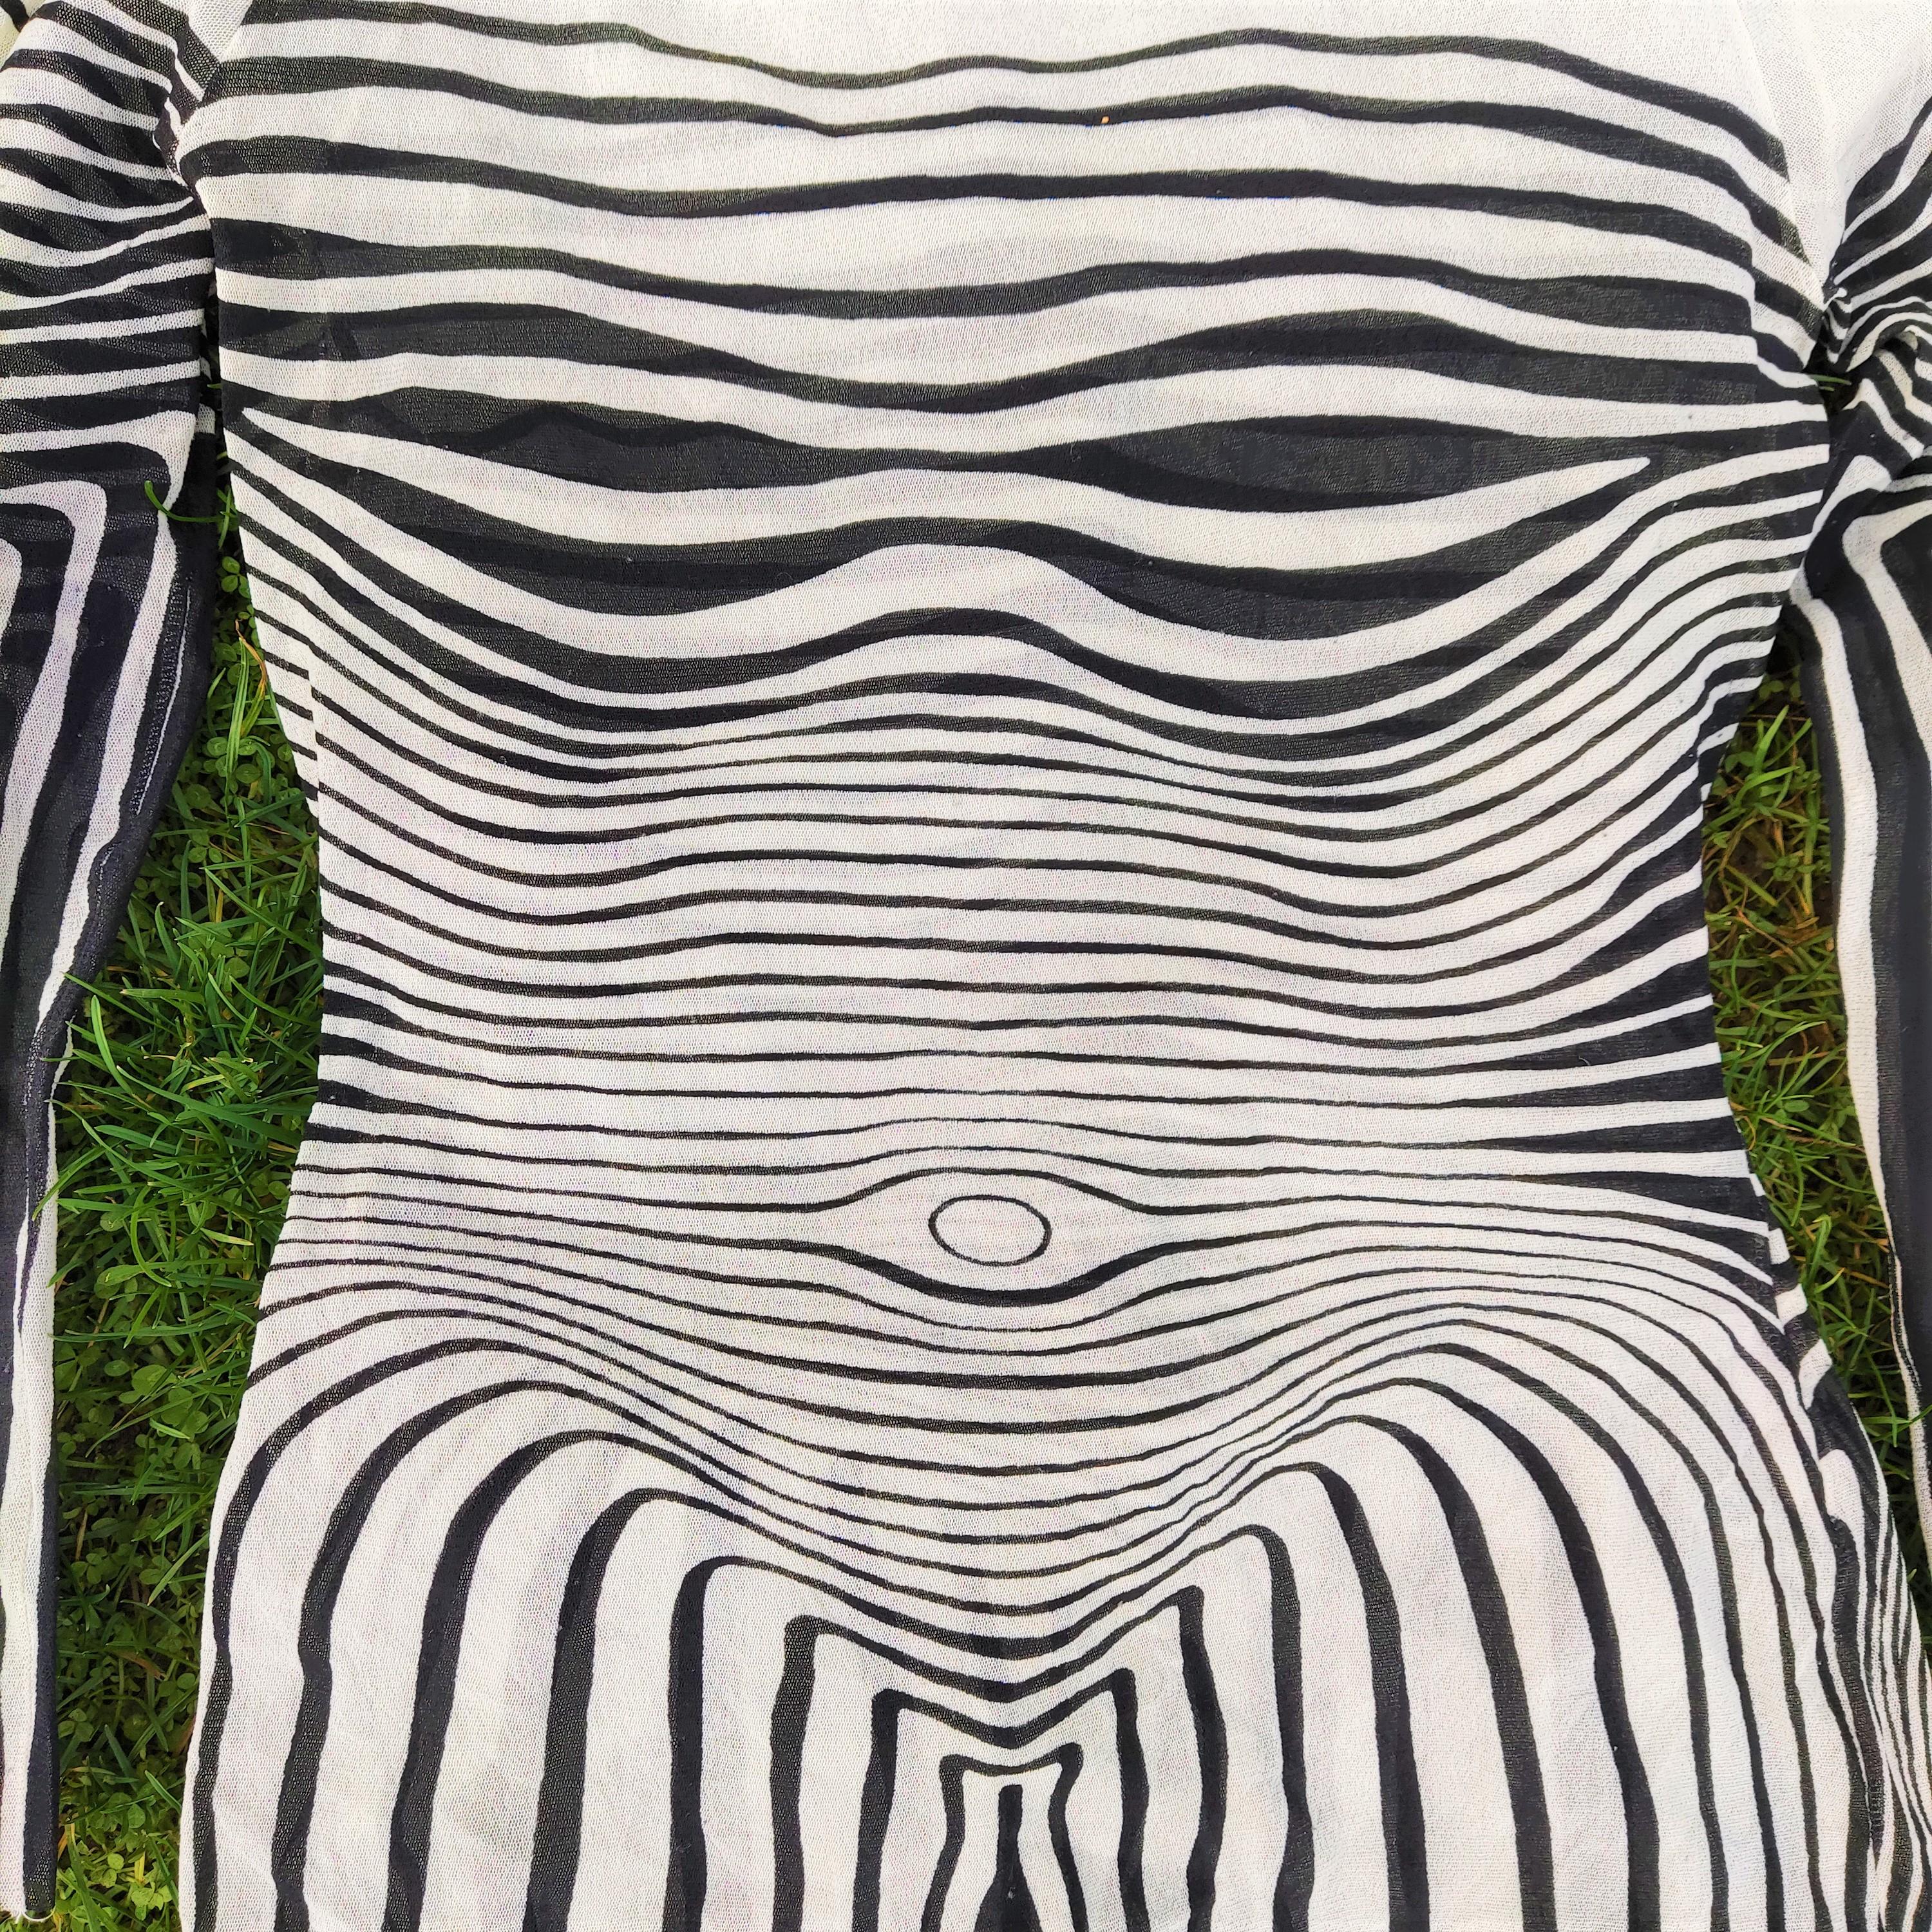 Jean Paul Gaultier Cyberbaba Zebra Optical Illusion Striped Transparent Mesh Top 2